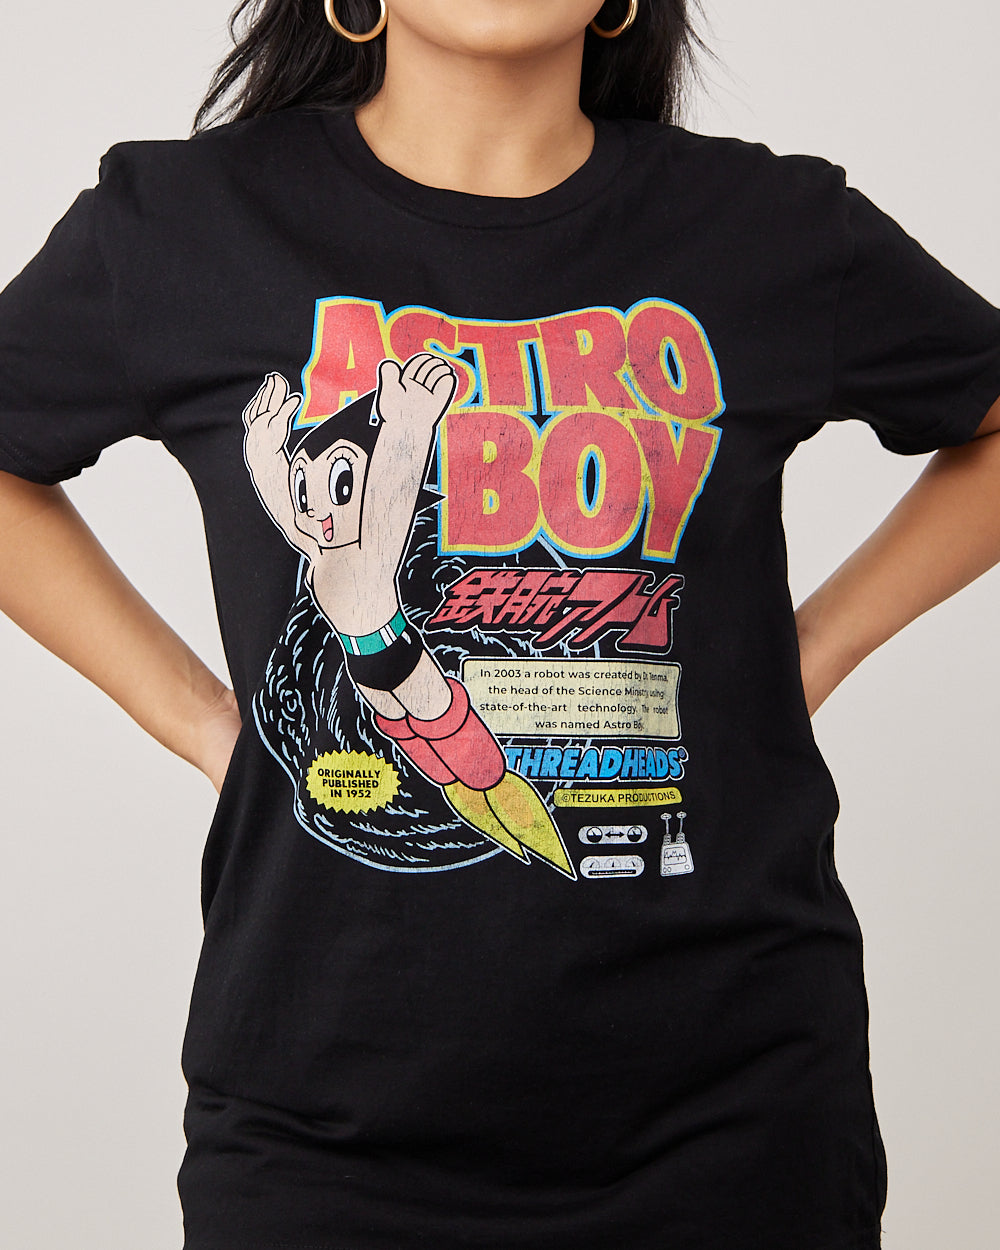 Astros Name Personalized Vintage Retro Gift Men Women T-Shirt